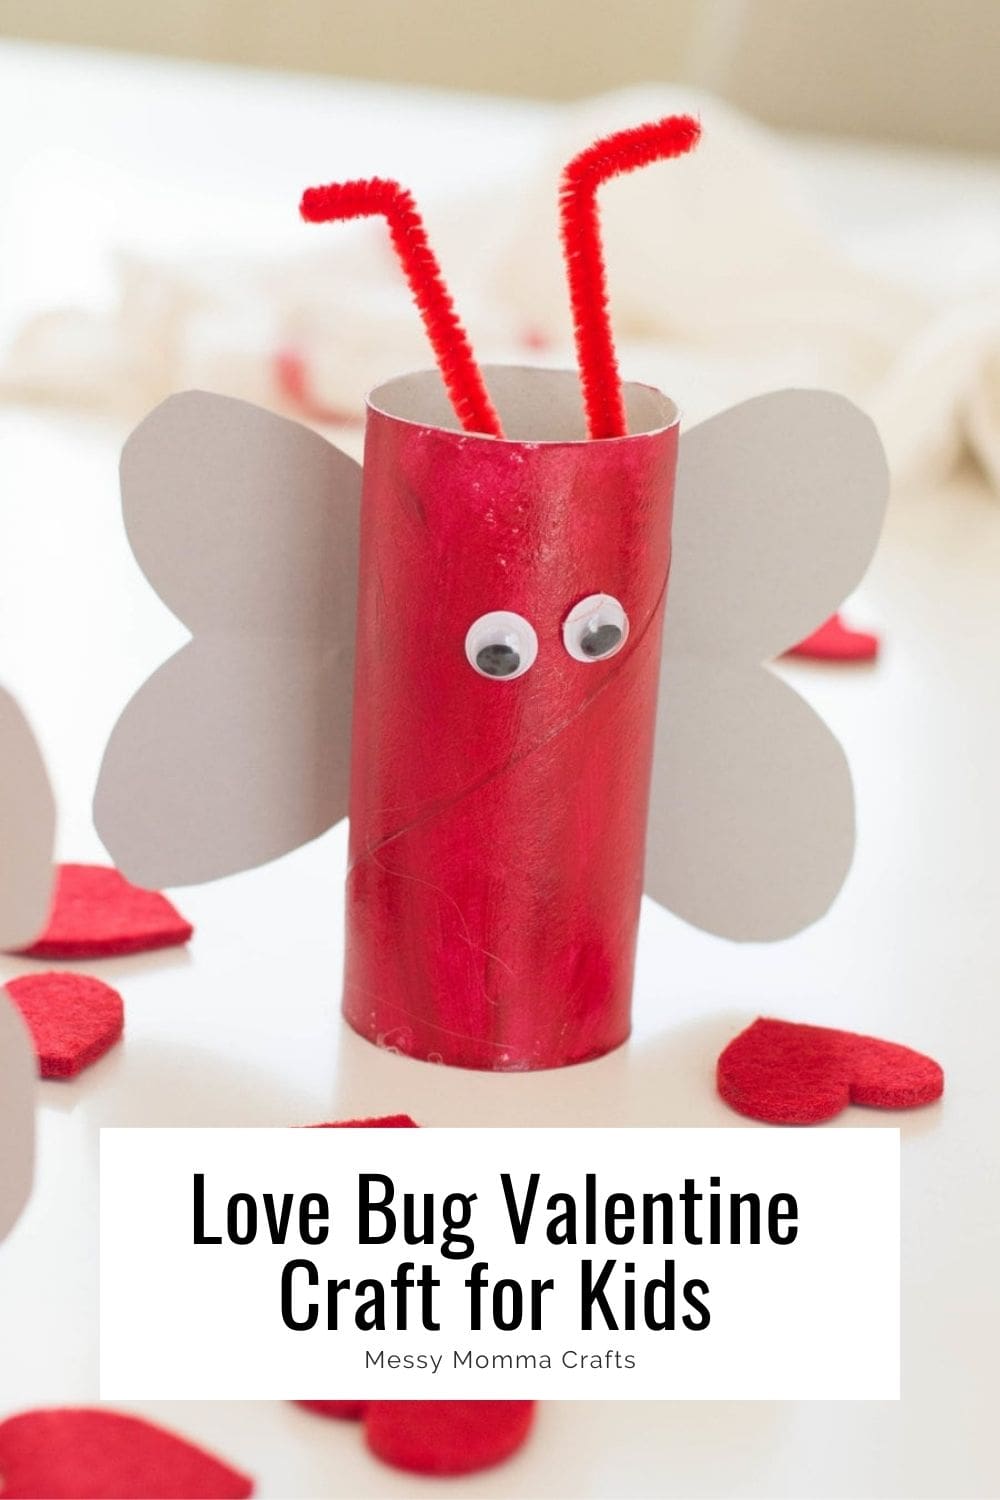 Love bug valentine craft for kids.